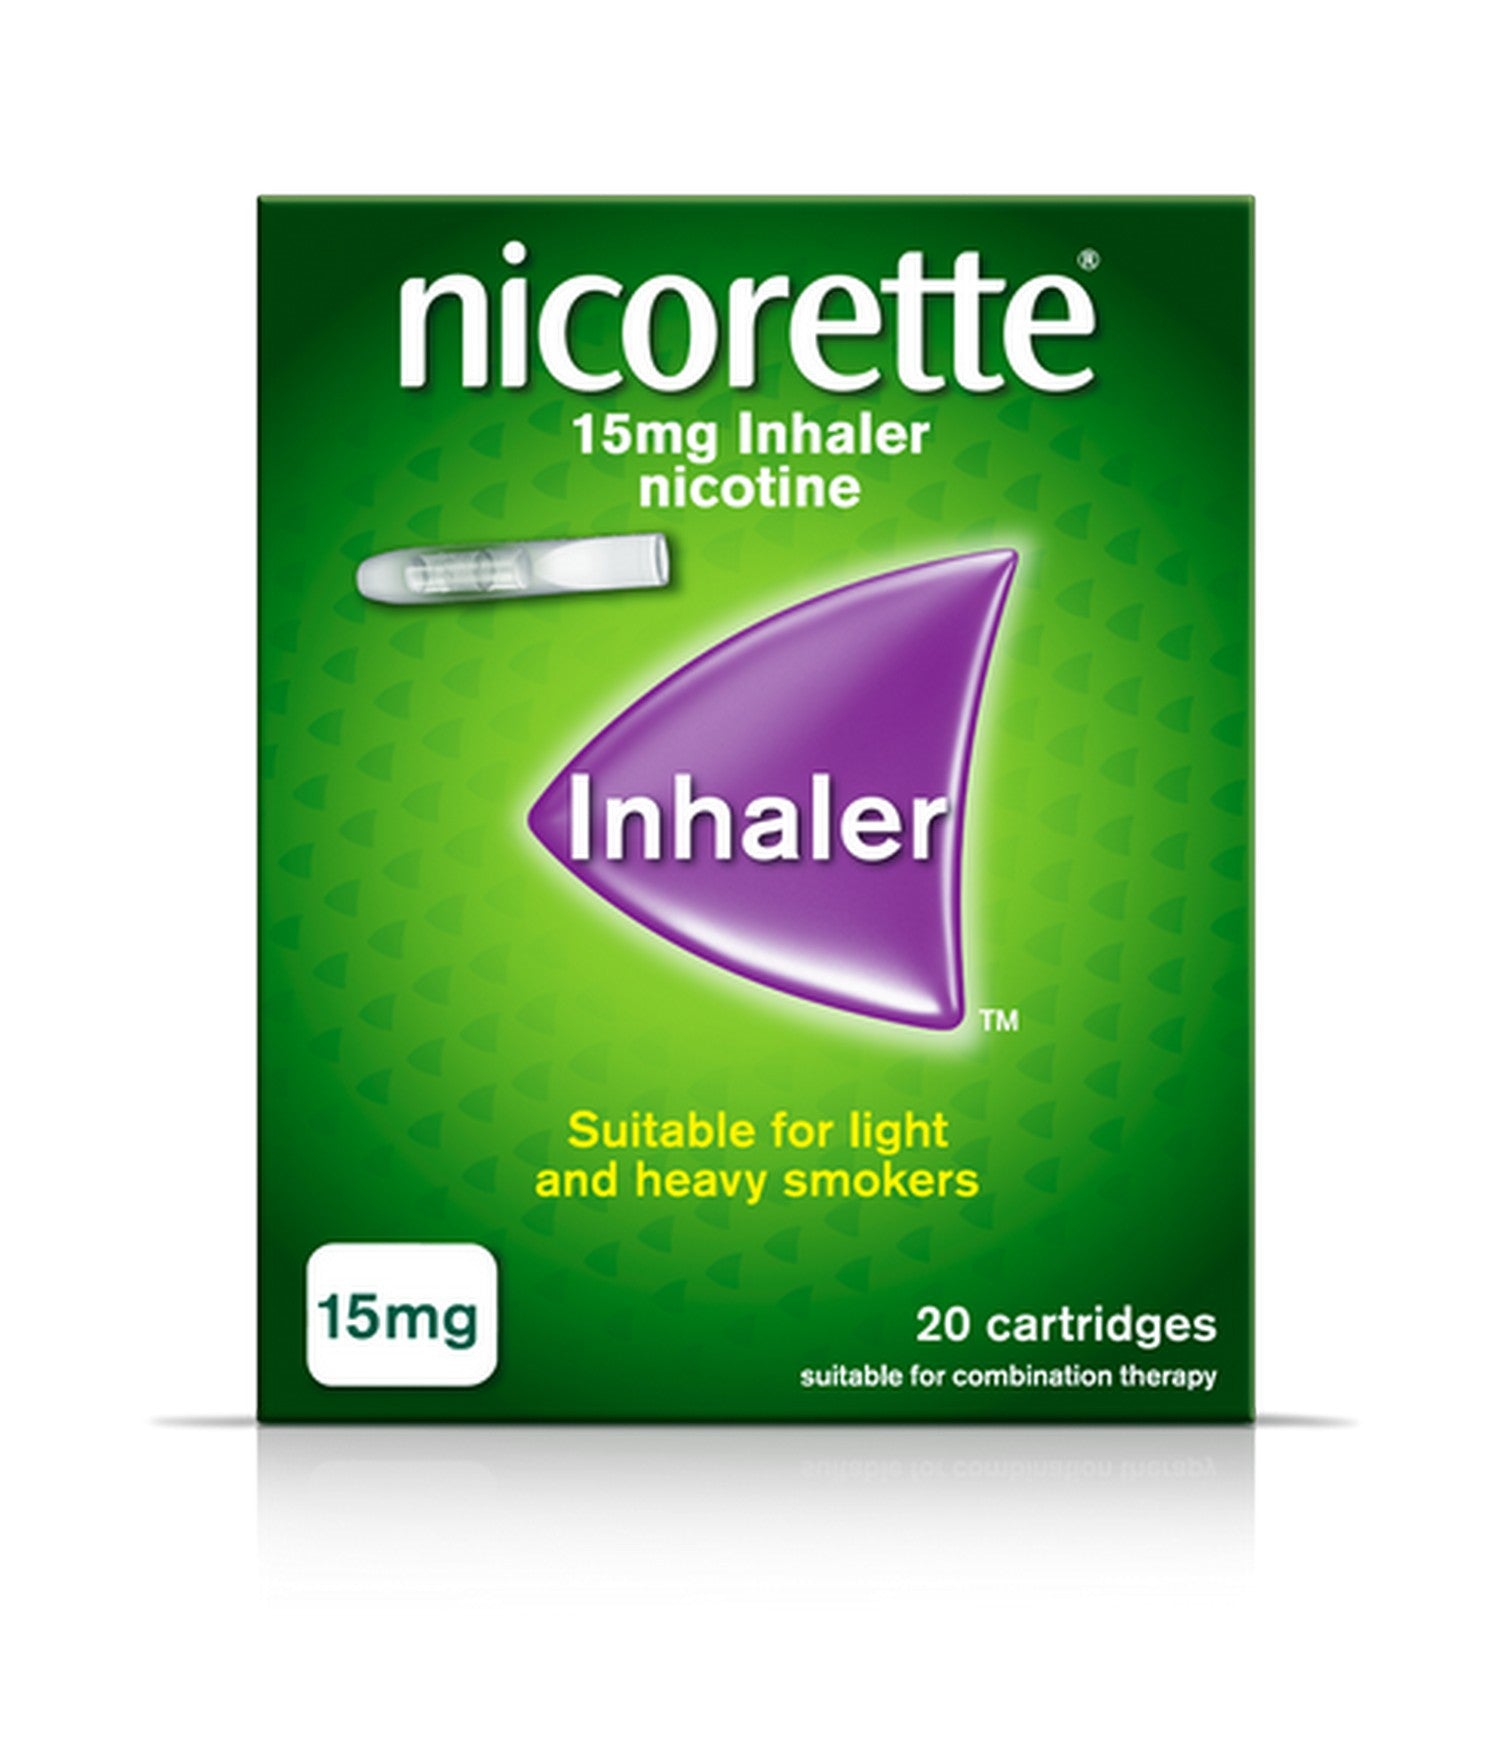 Nicorette 15mg Inhaler Nicotine Cartridges